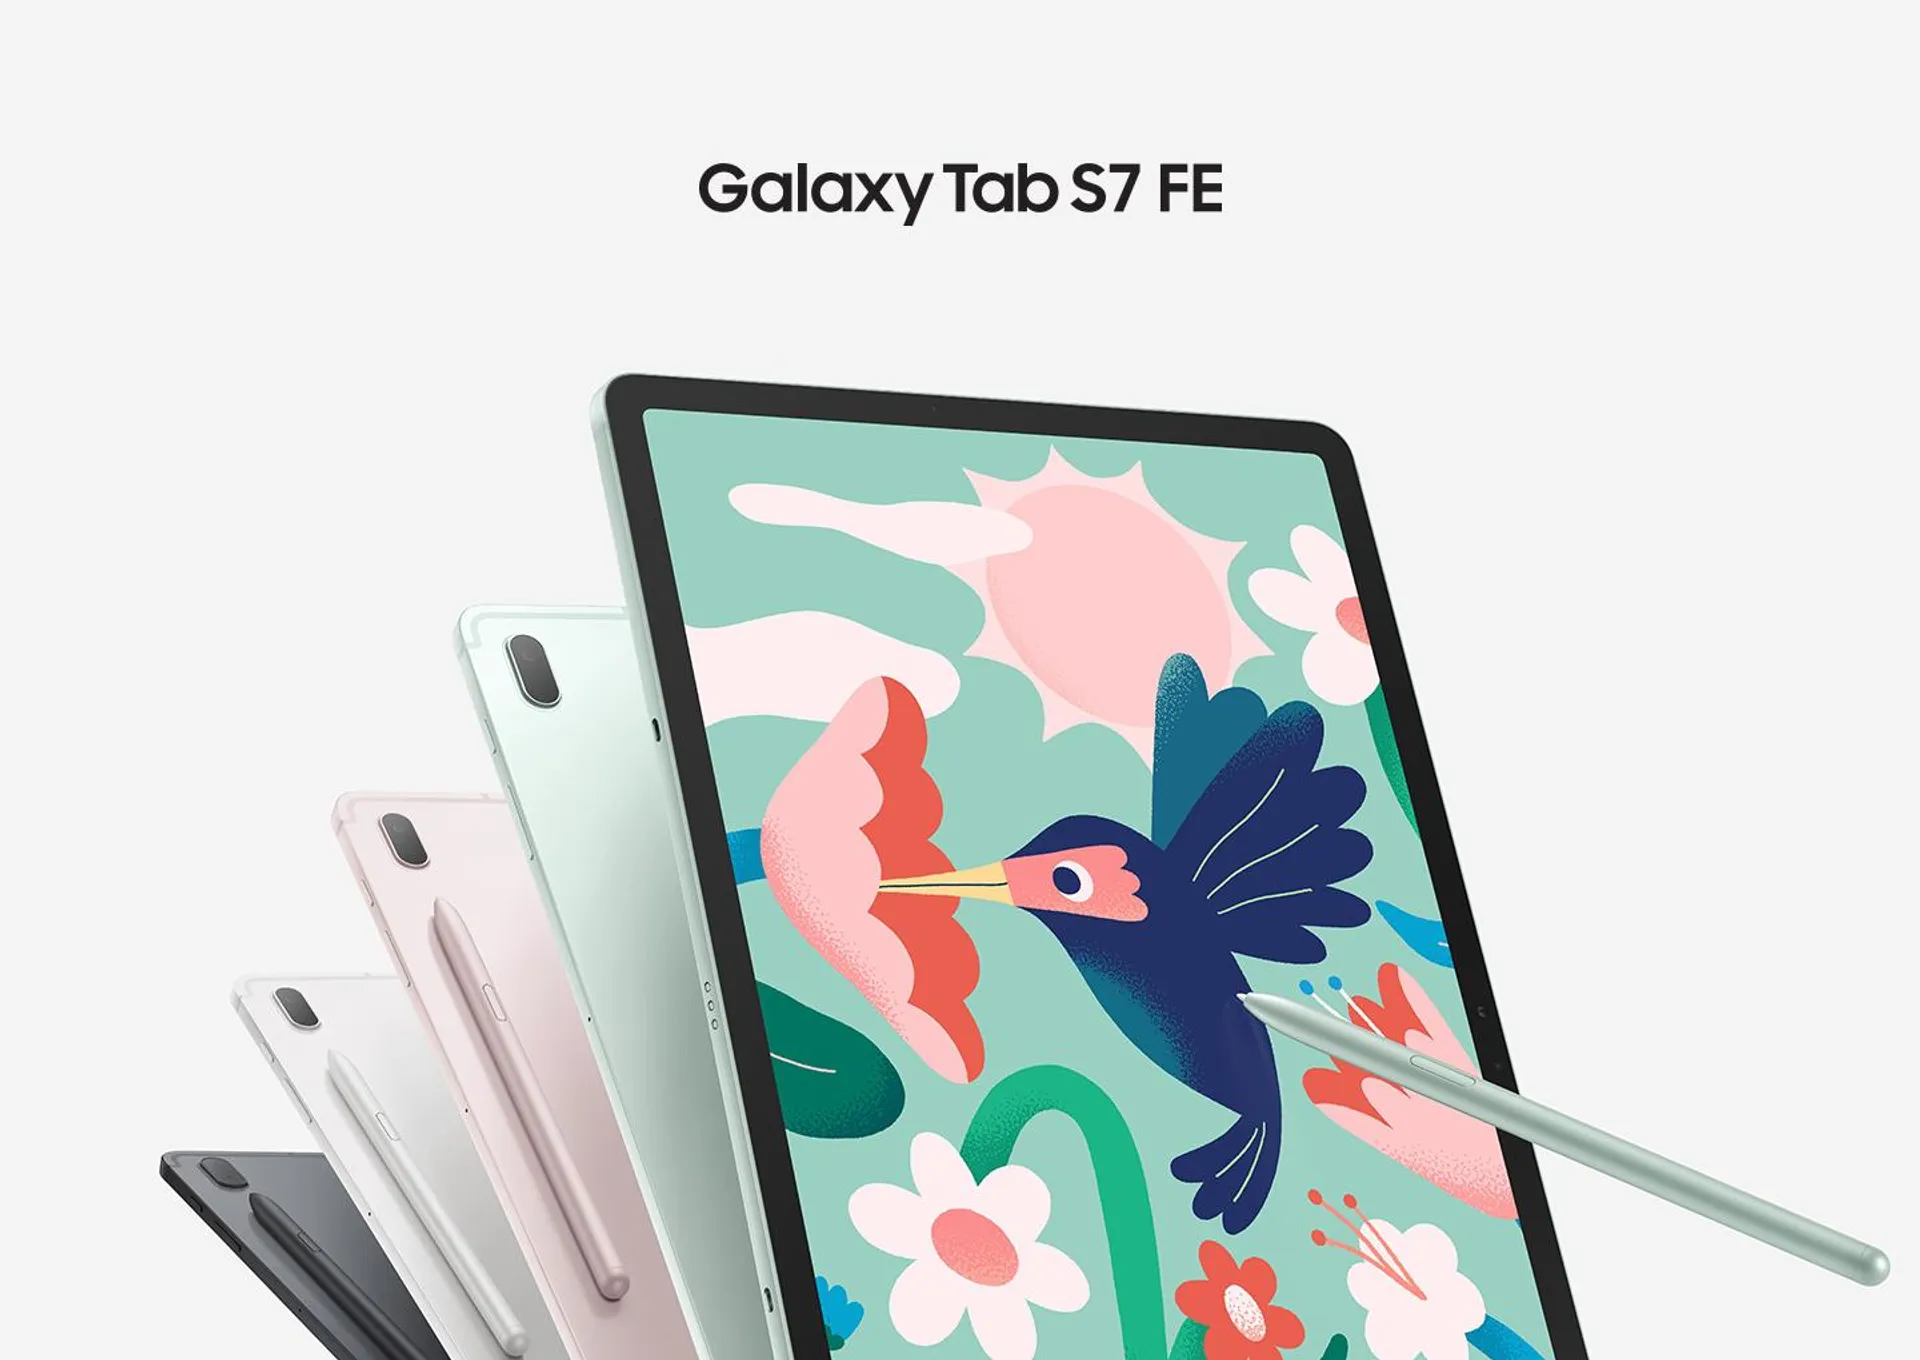 Galaxy Tab S7 FE + Keyboard Cover (12.4") WIFI